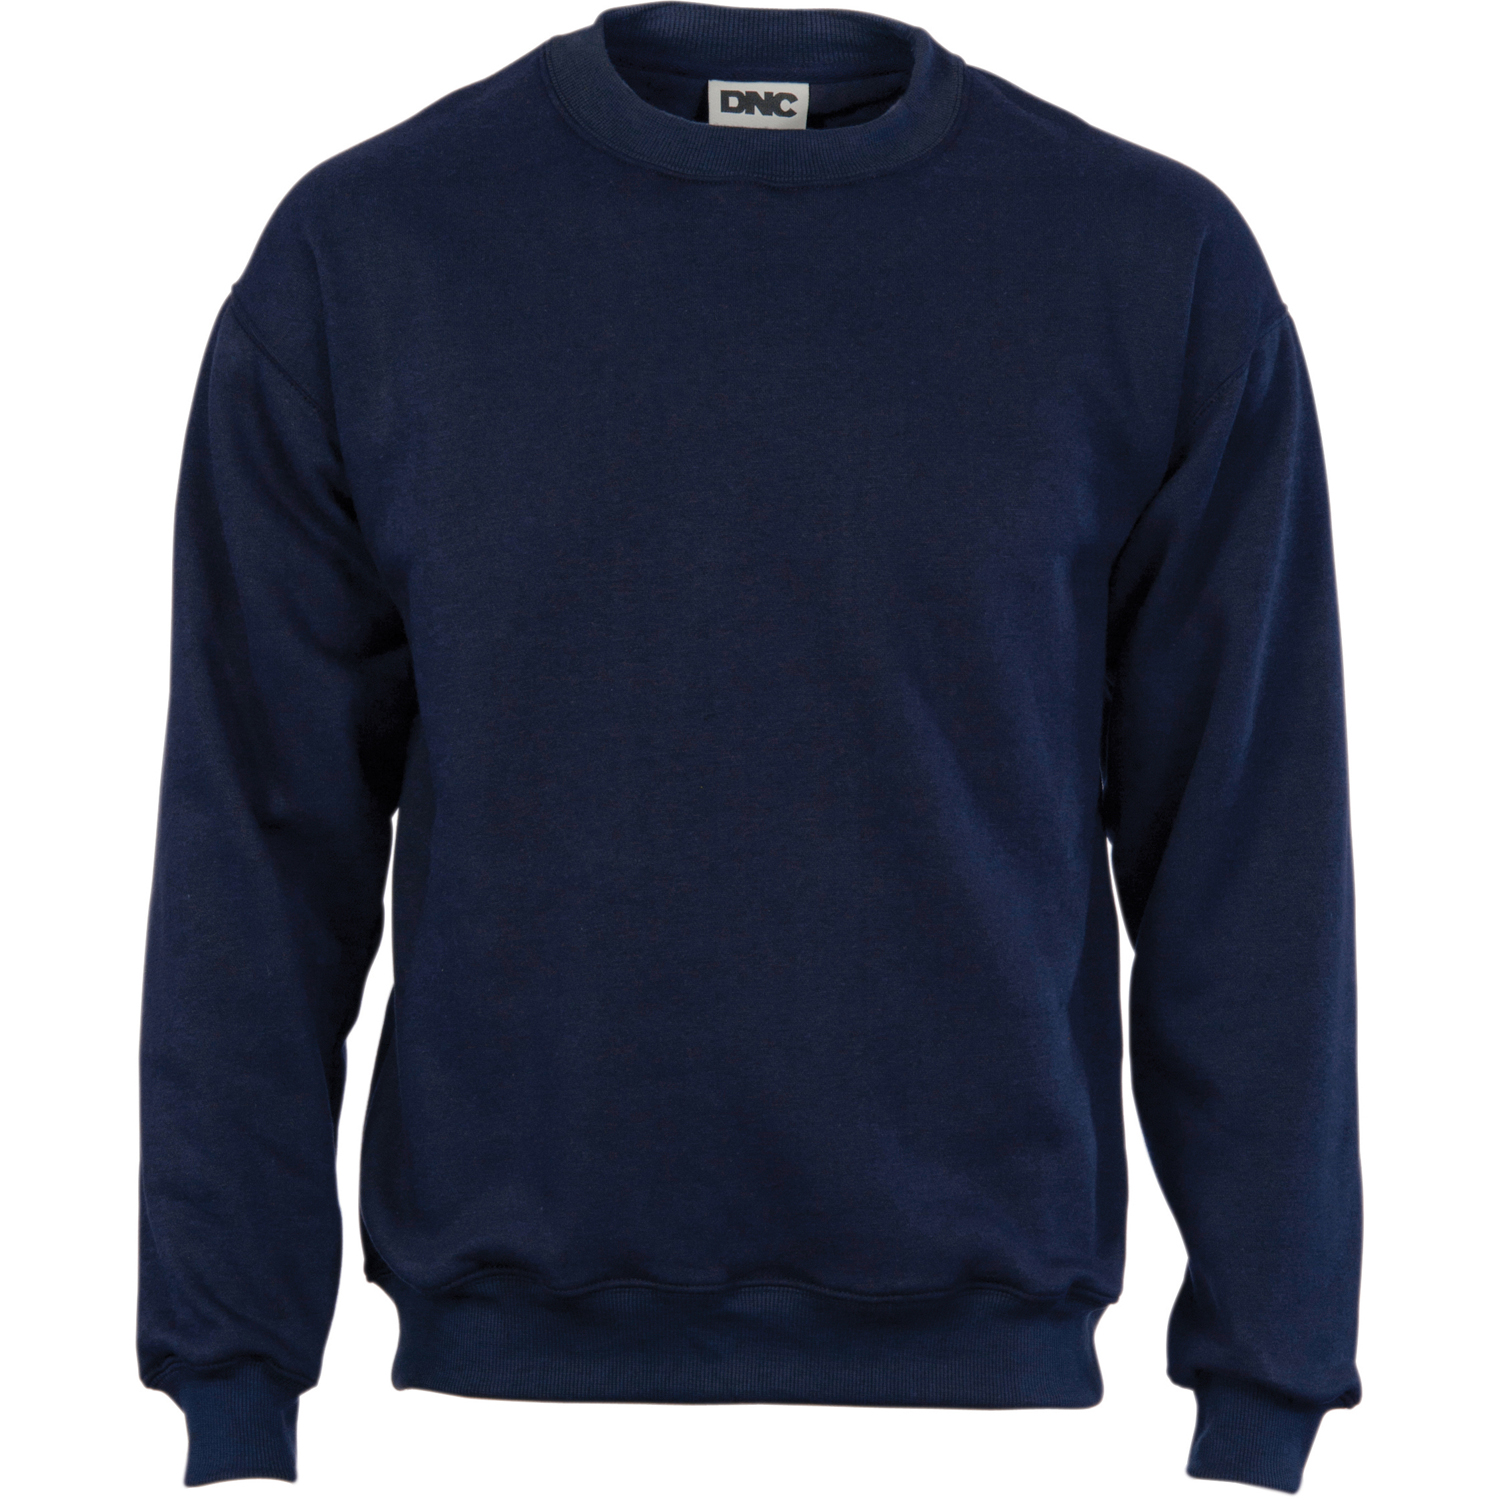 Crew Neck Fleecy Sweatshirt (Sloppy Joe) - 5302 - DNC Workwear | SKG ...